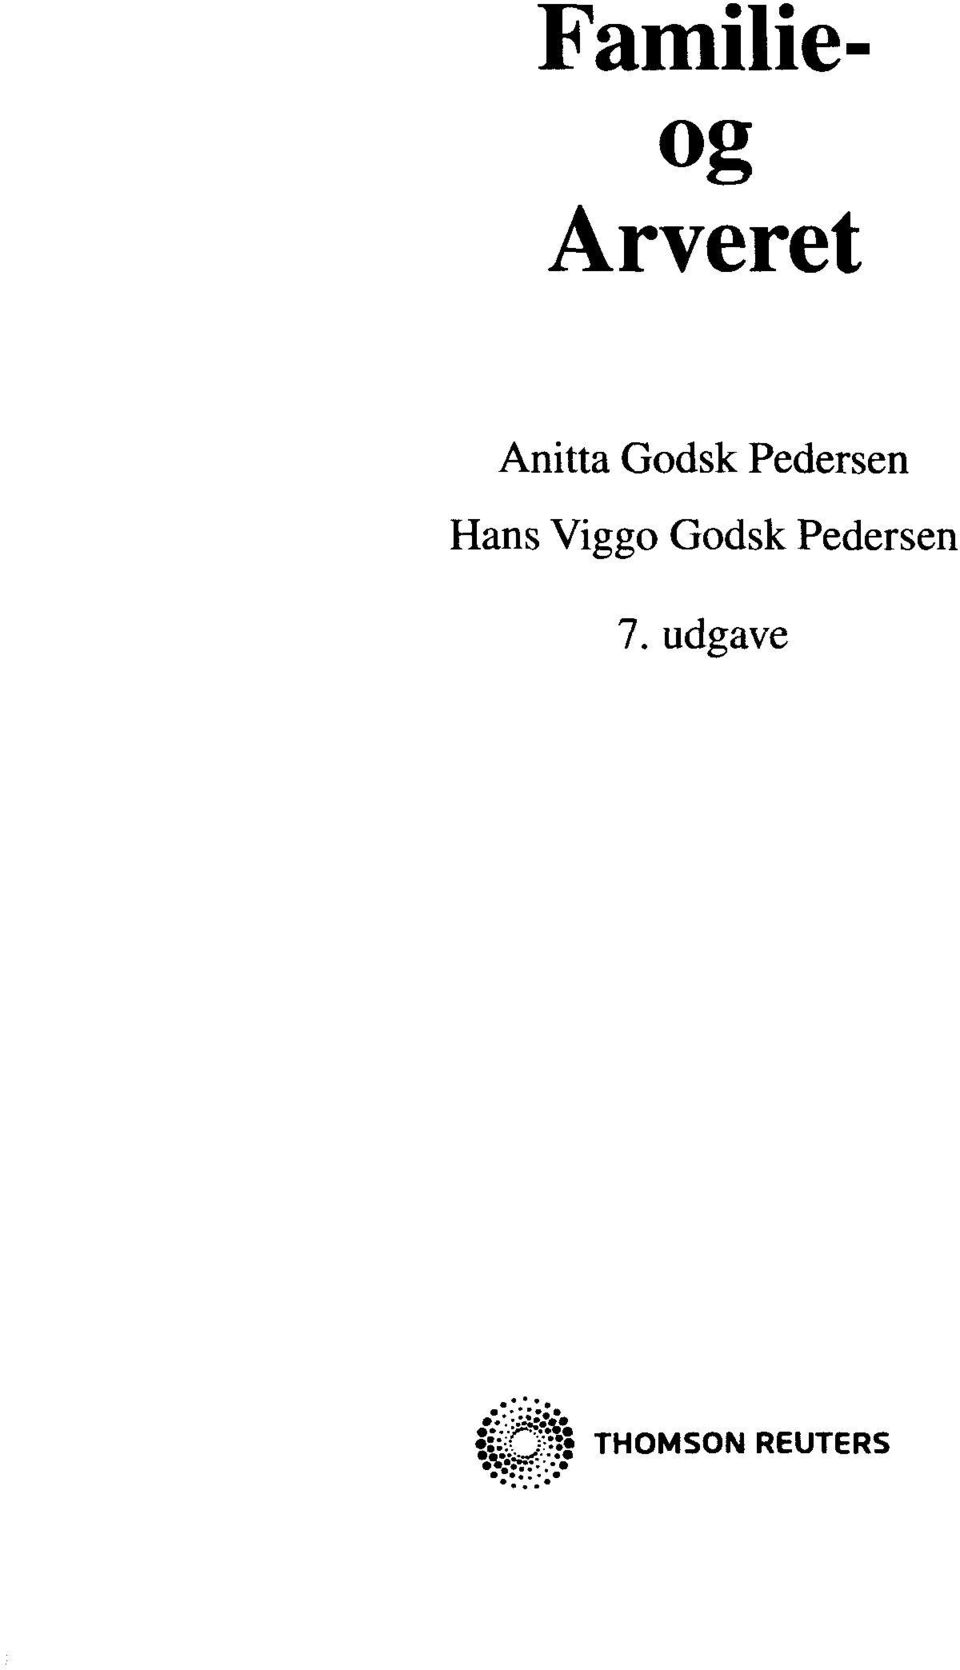 Hans Viggo Godsk